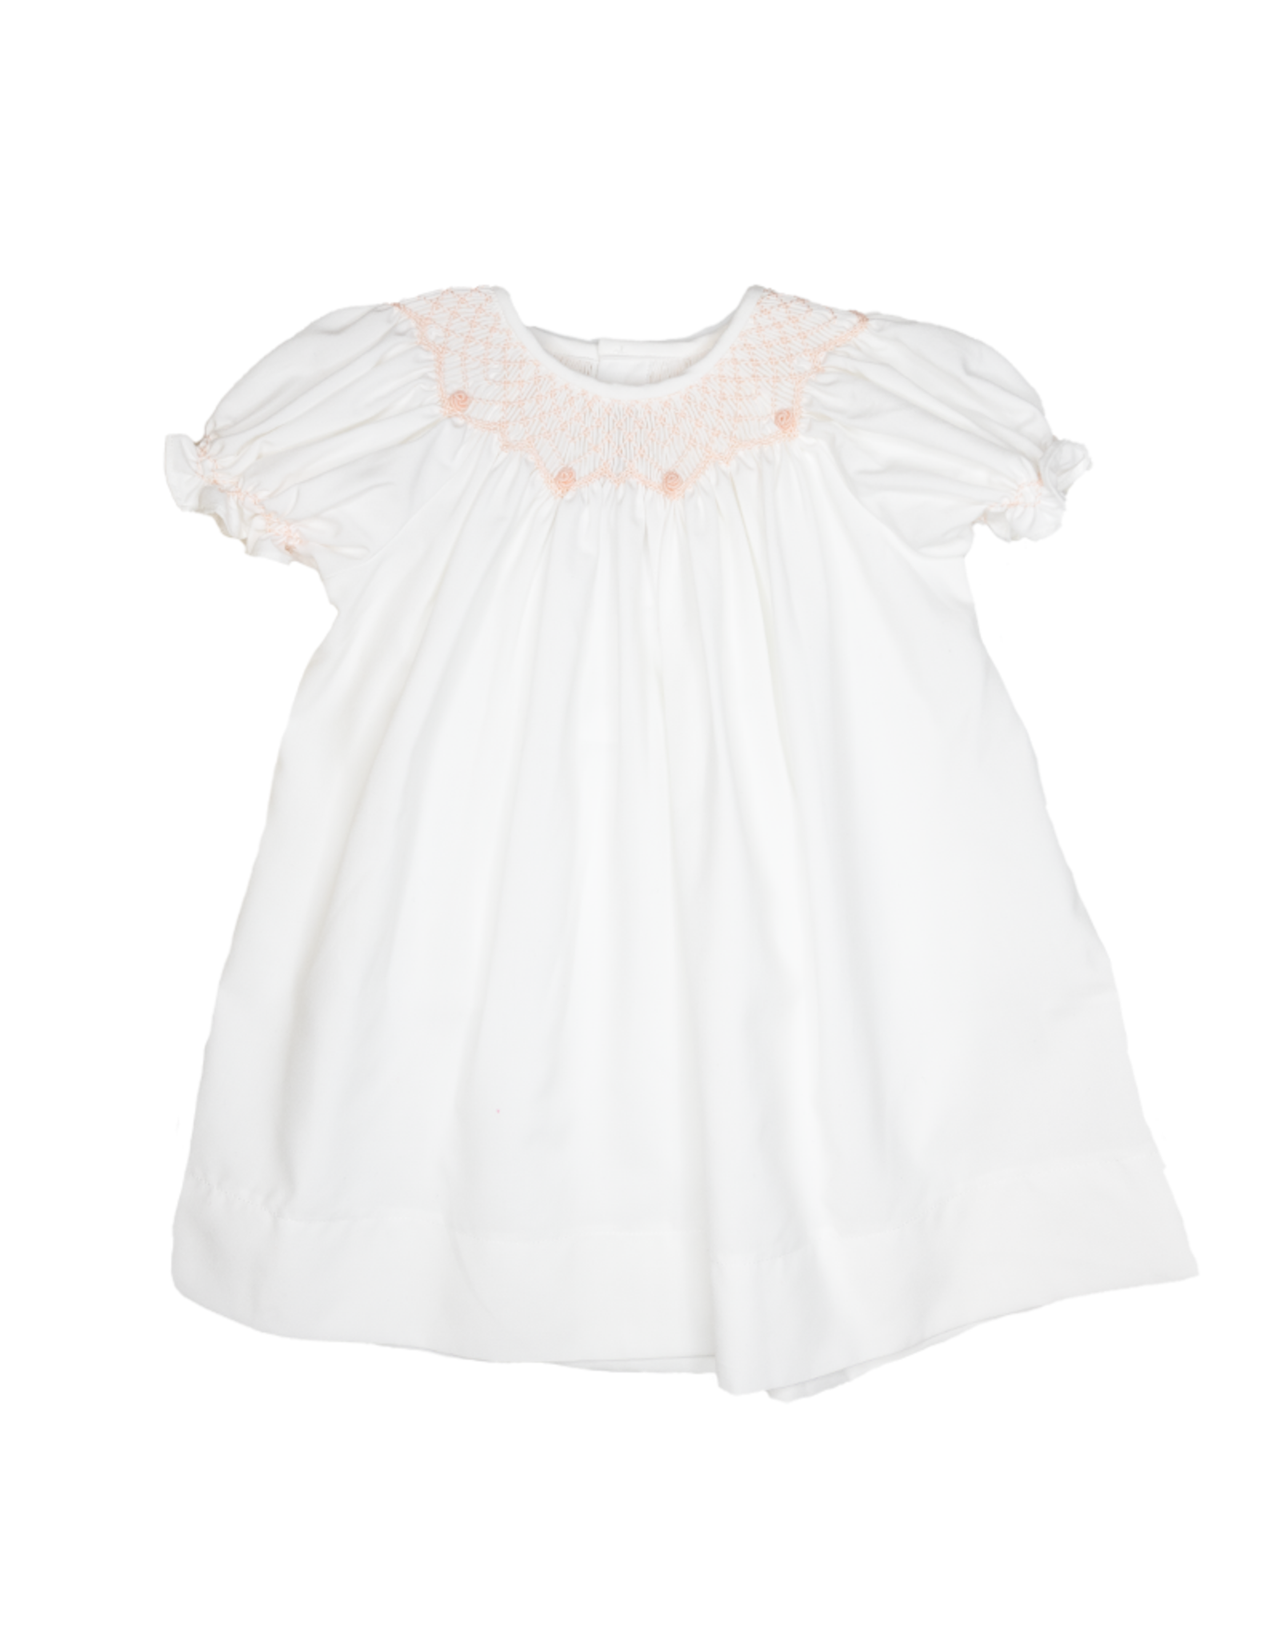 Sweet Dreams Ava White/Peach Smocked Dress NHC151